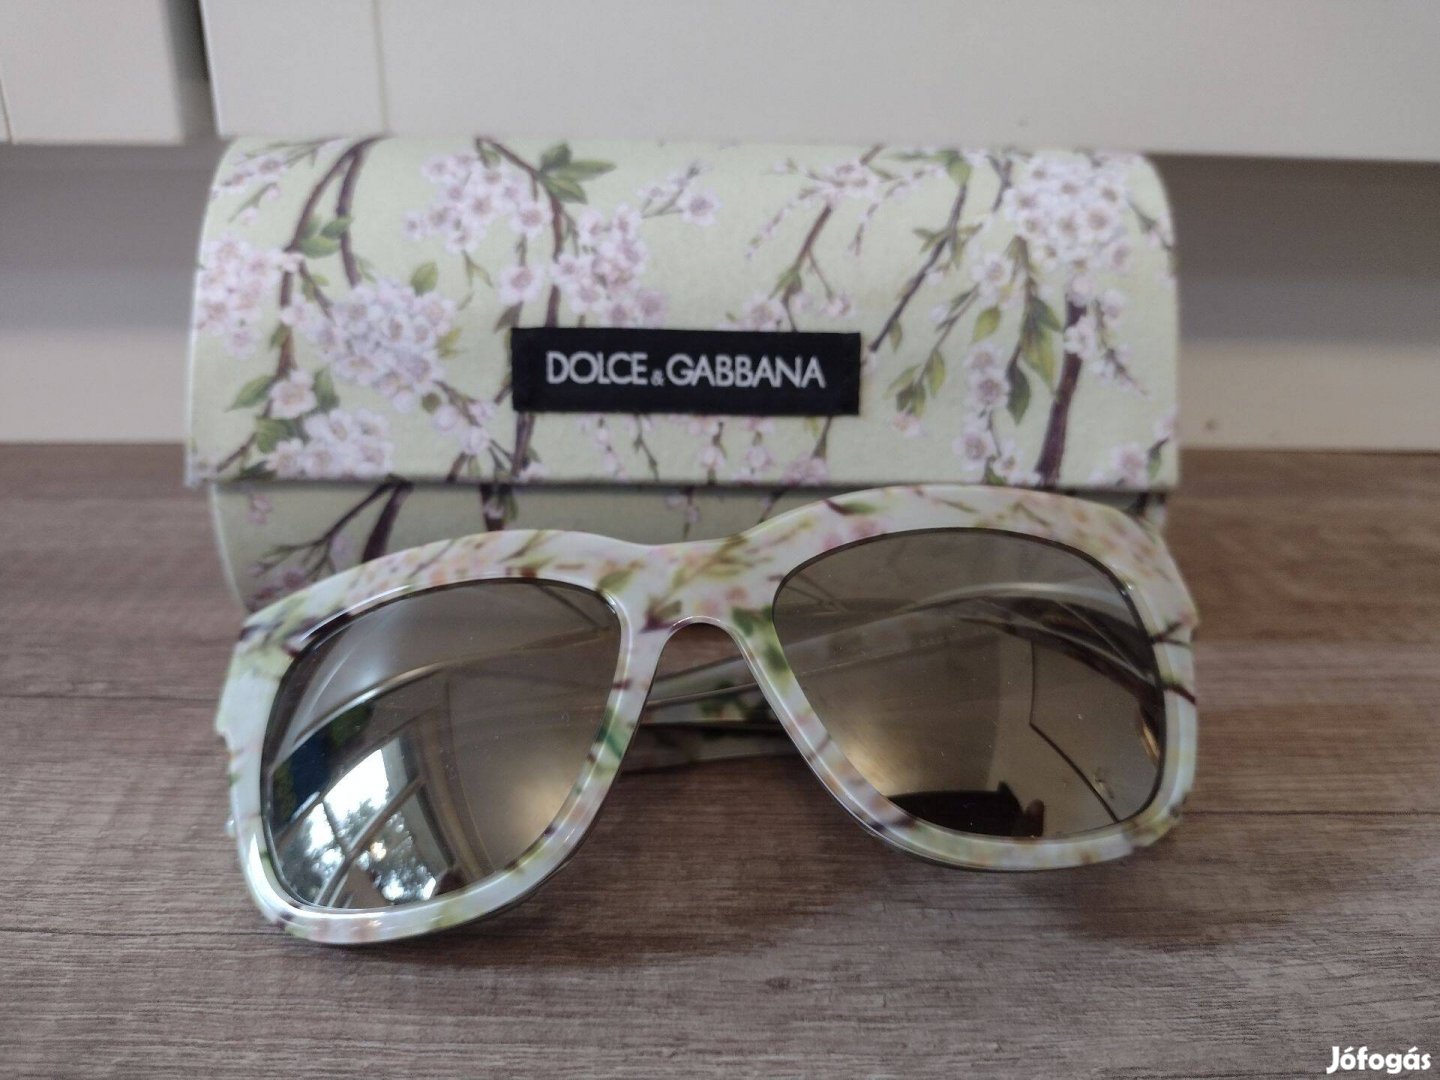 Dolce & Gabbana napszemüveg peach flower